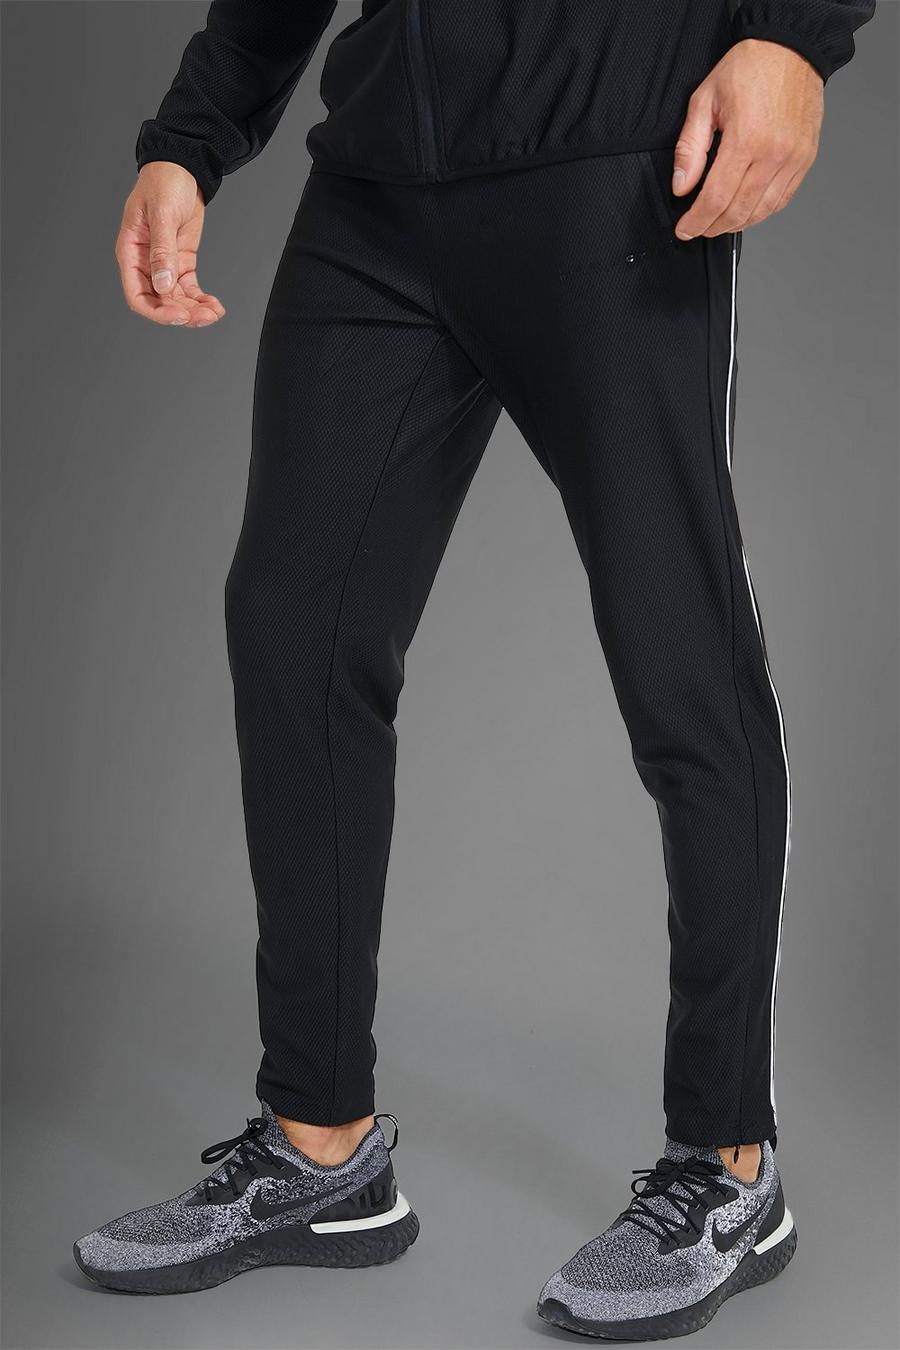 Pantaloni tuta Man Active Gym con cordoncino riflettente, Black negro